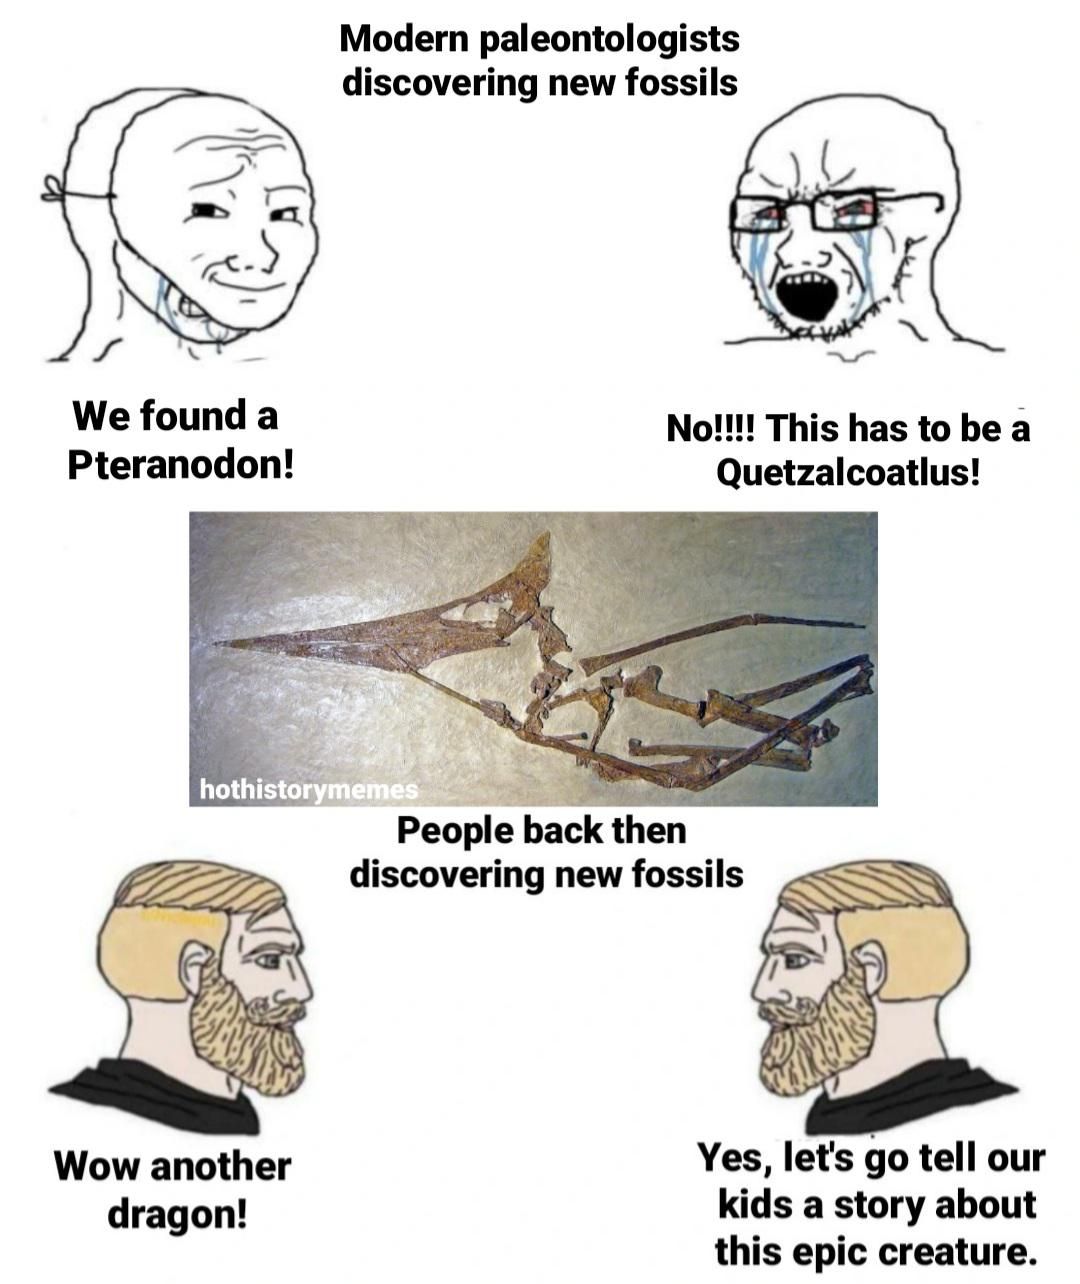 No offense to any paleontologists